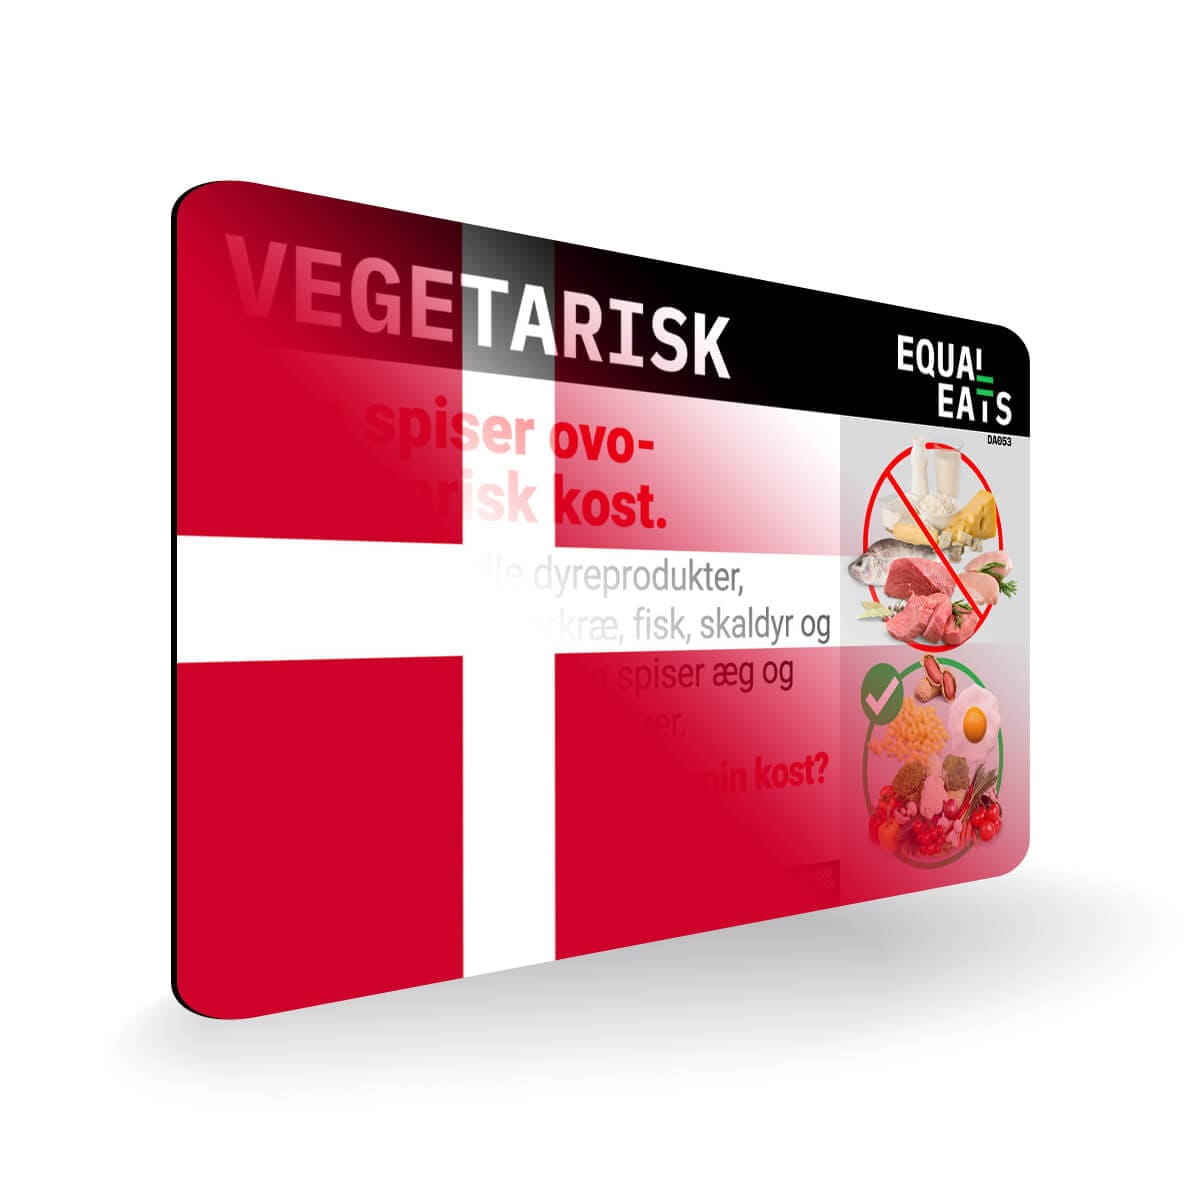 Ovo Vegetarian in Danish. Card for Vegetarian in Denmark